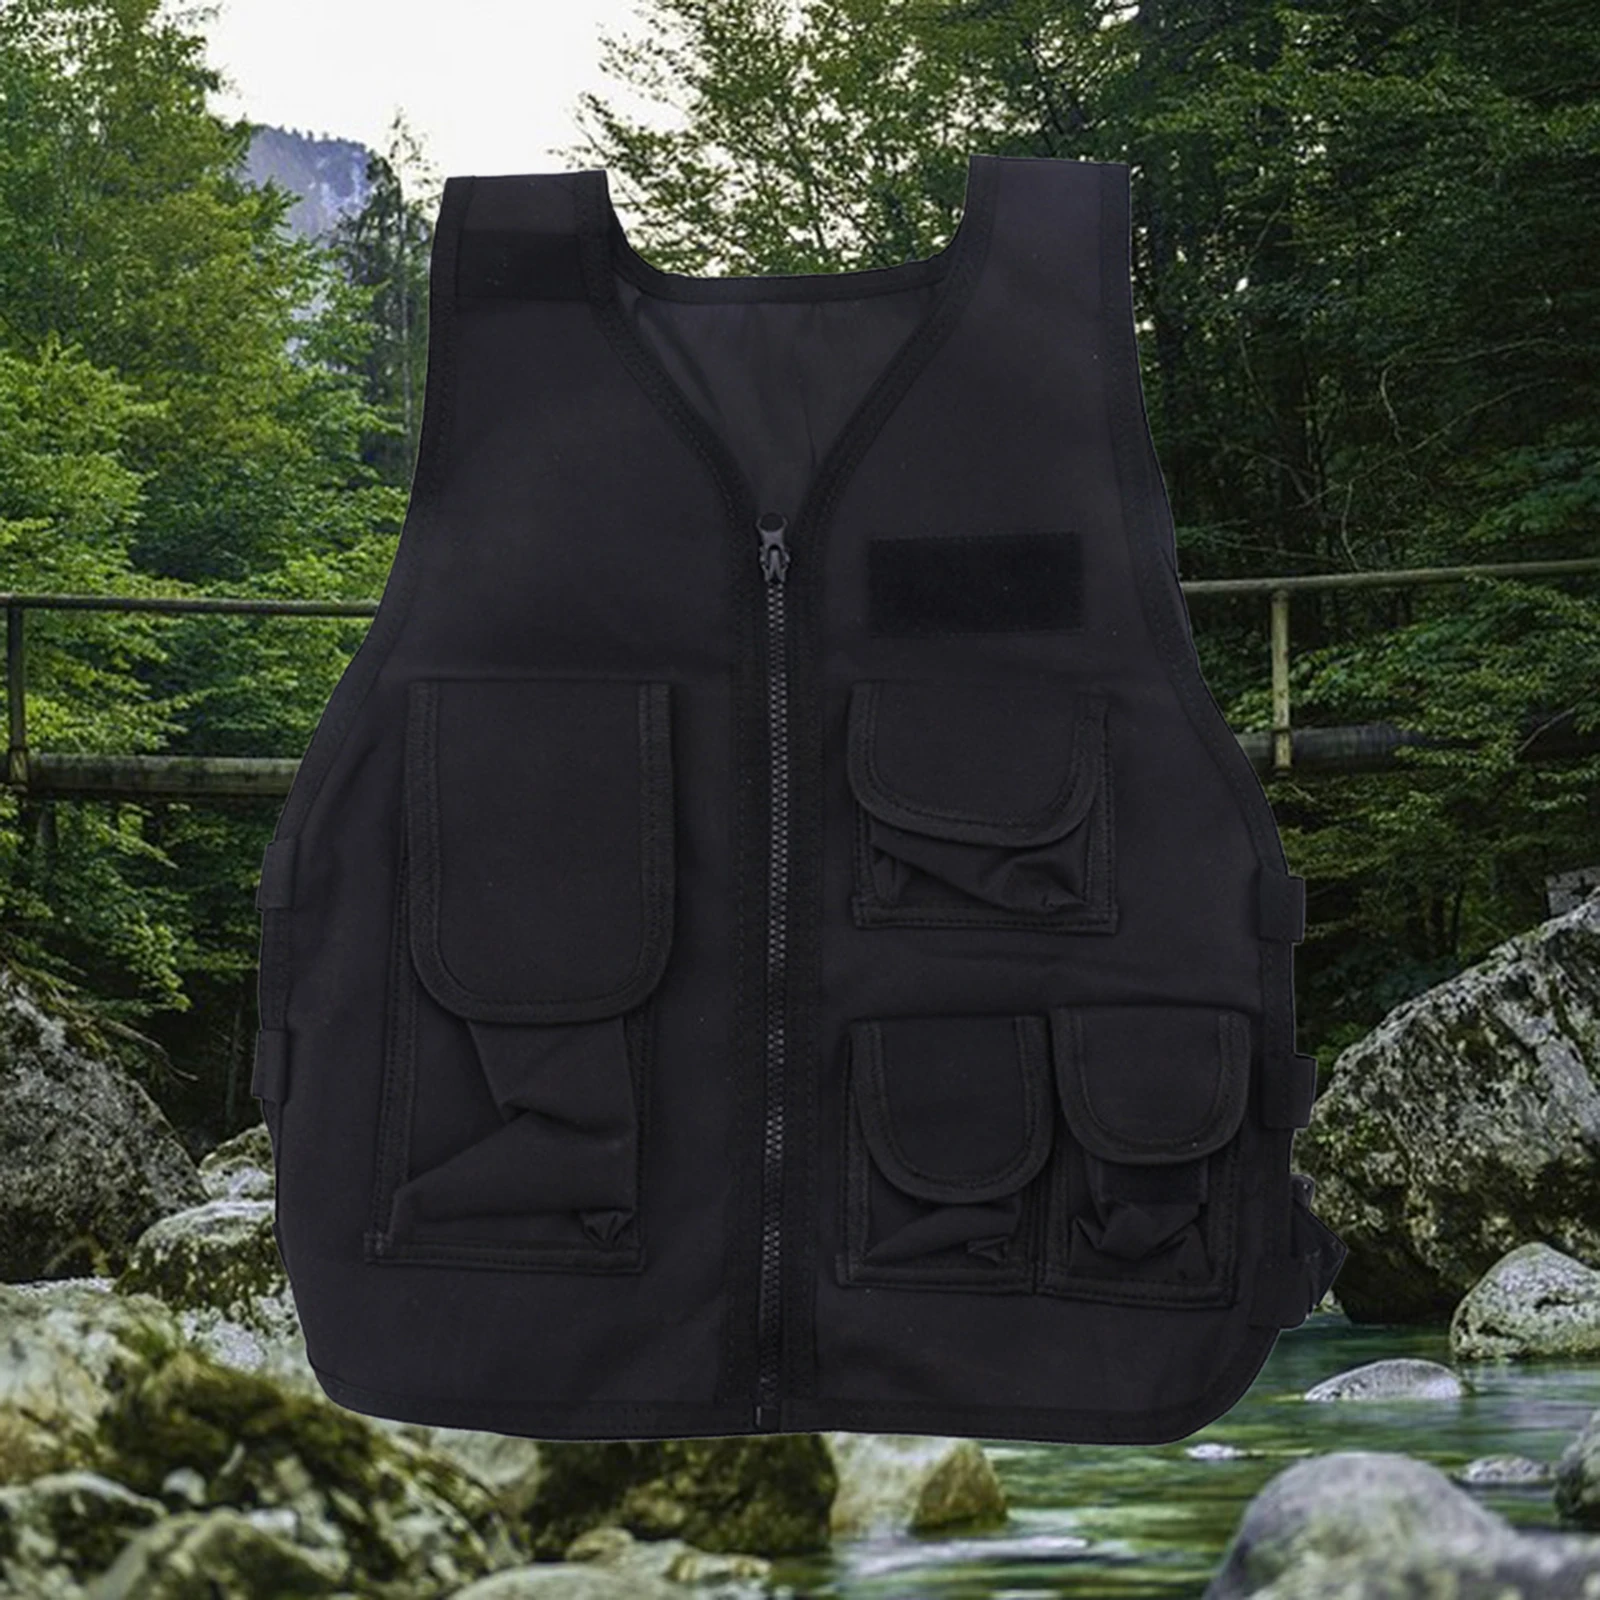 Adjustable Children Anti-Stab Vest, Kids CS Gaming Body Chest Protect Vest Security Safe Guard Armour Vest Clothes Waistcoat